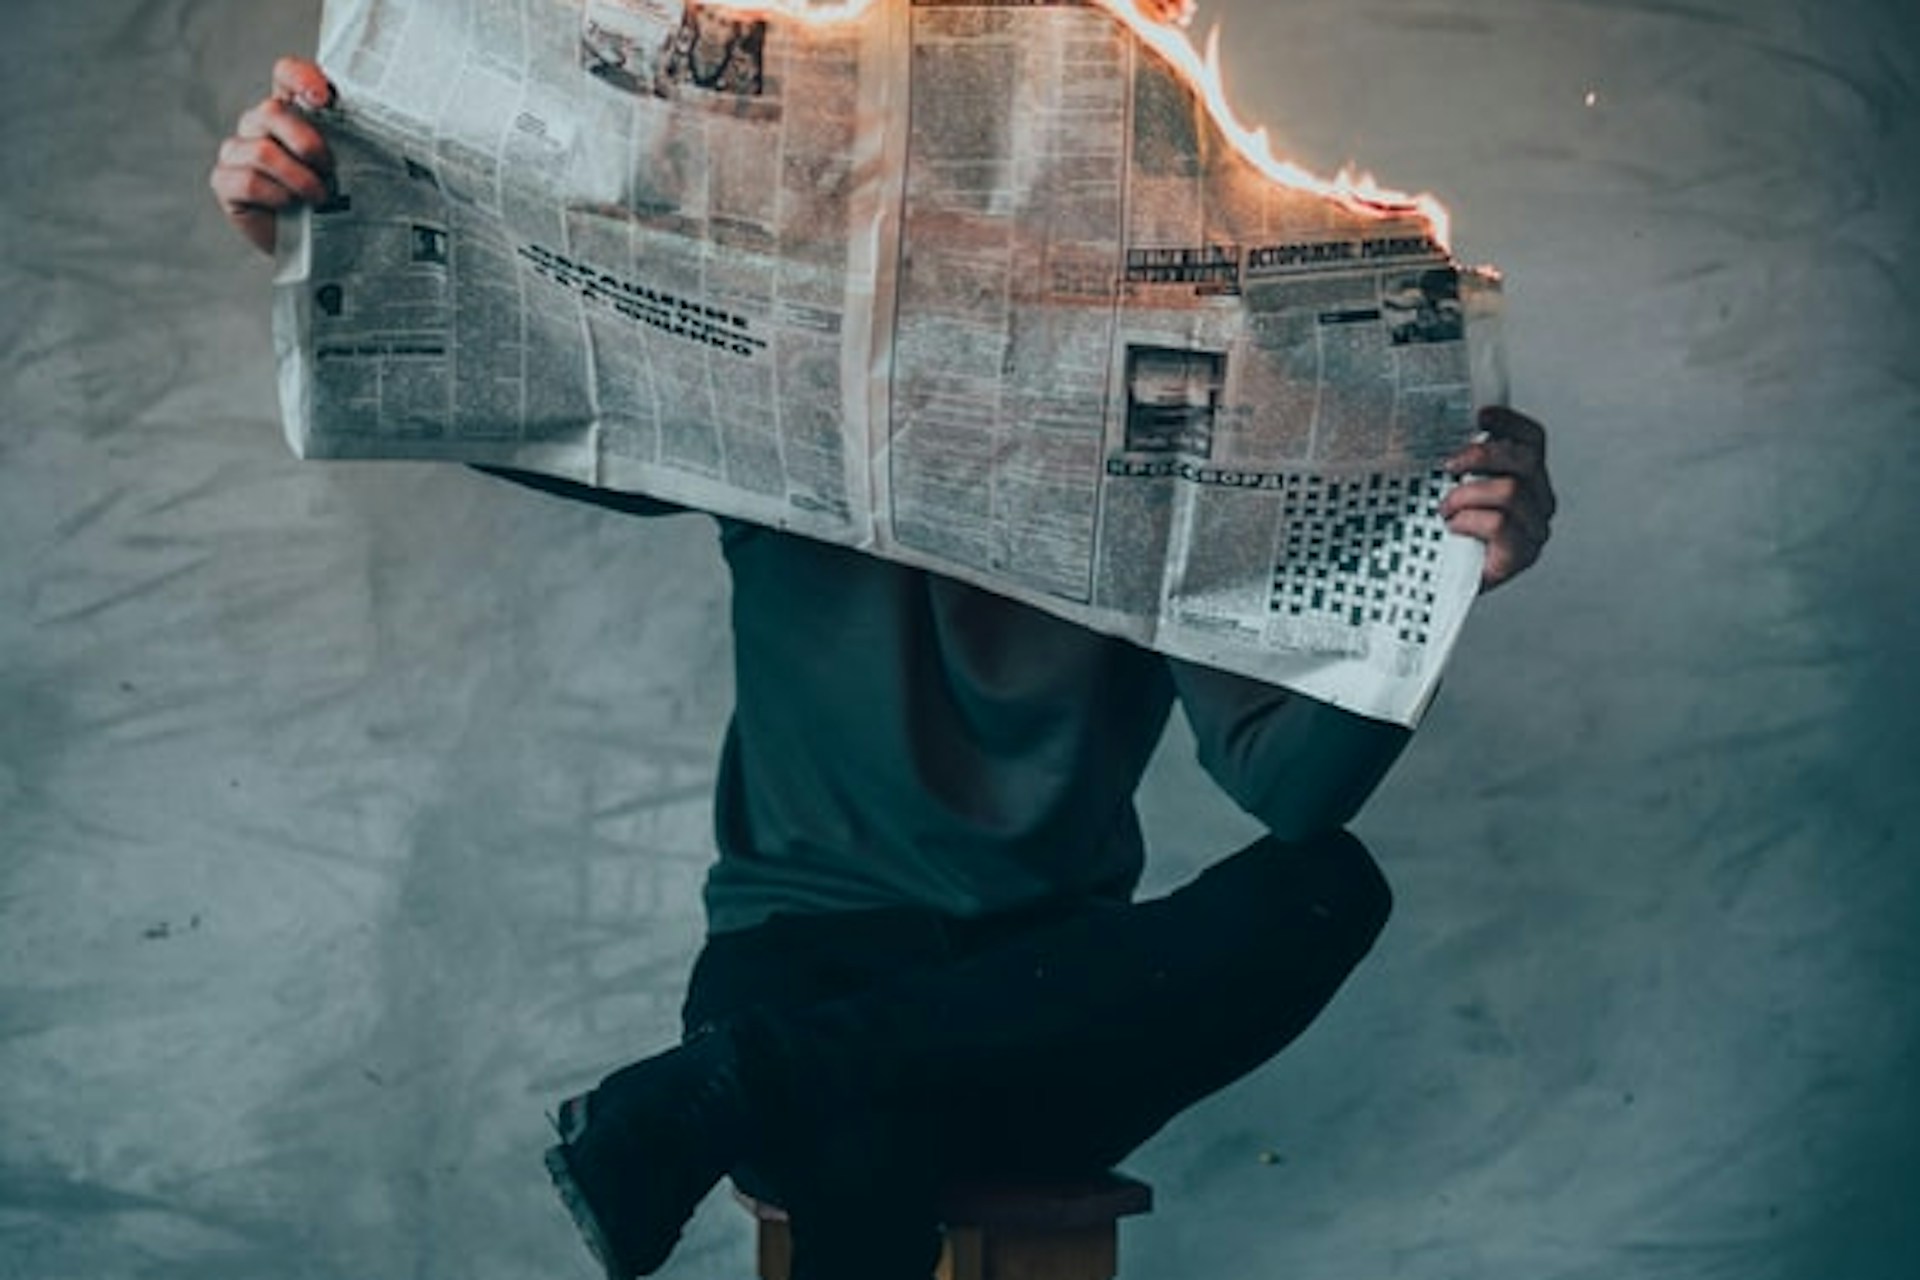 burning newspaper